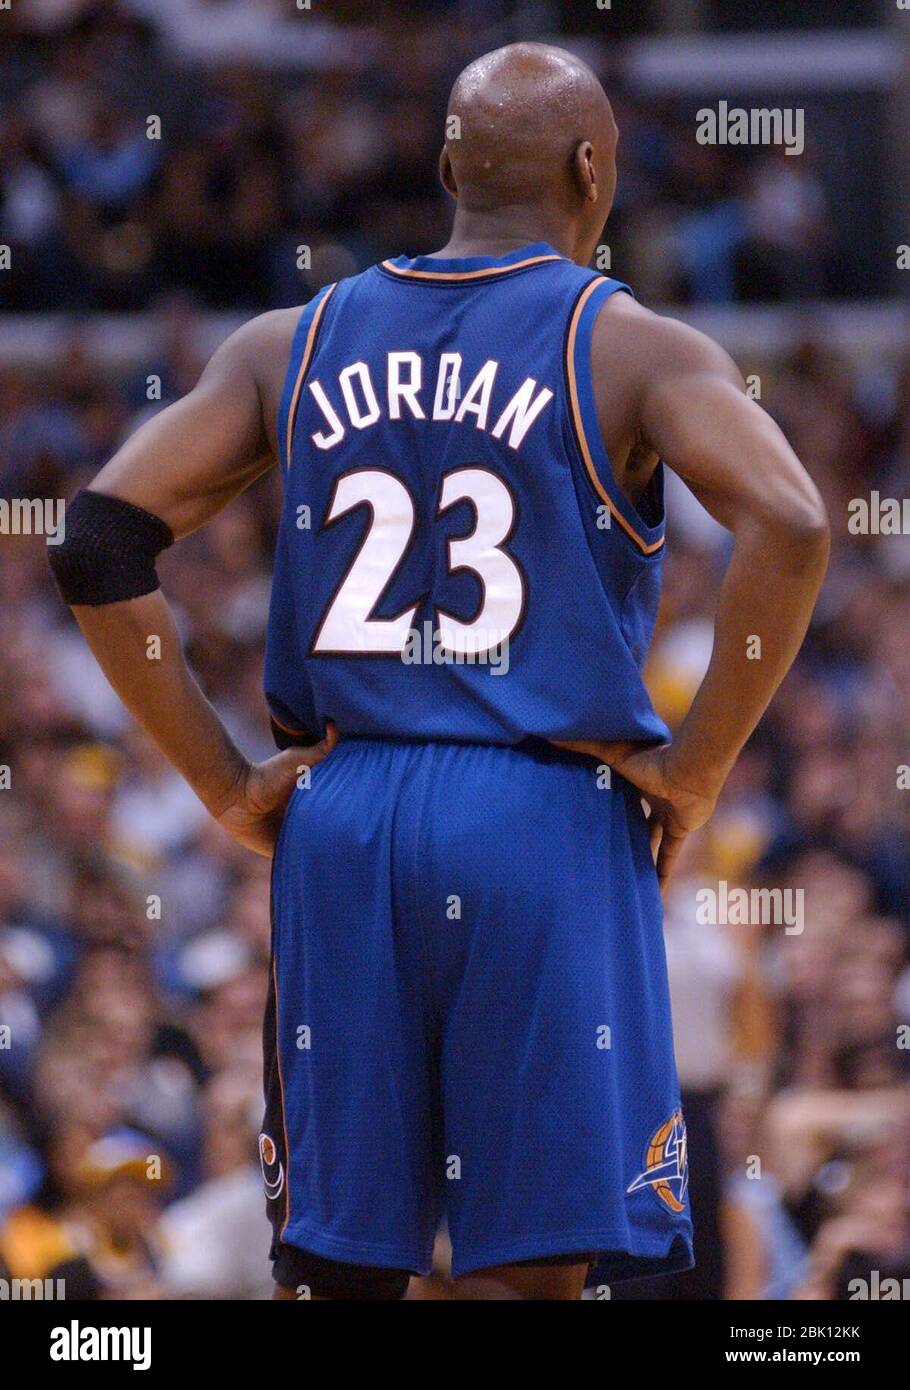 2003 NBA Retirement Game Washington Wizards Michael Jordan Jersey